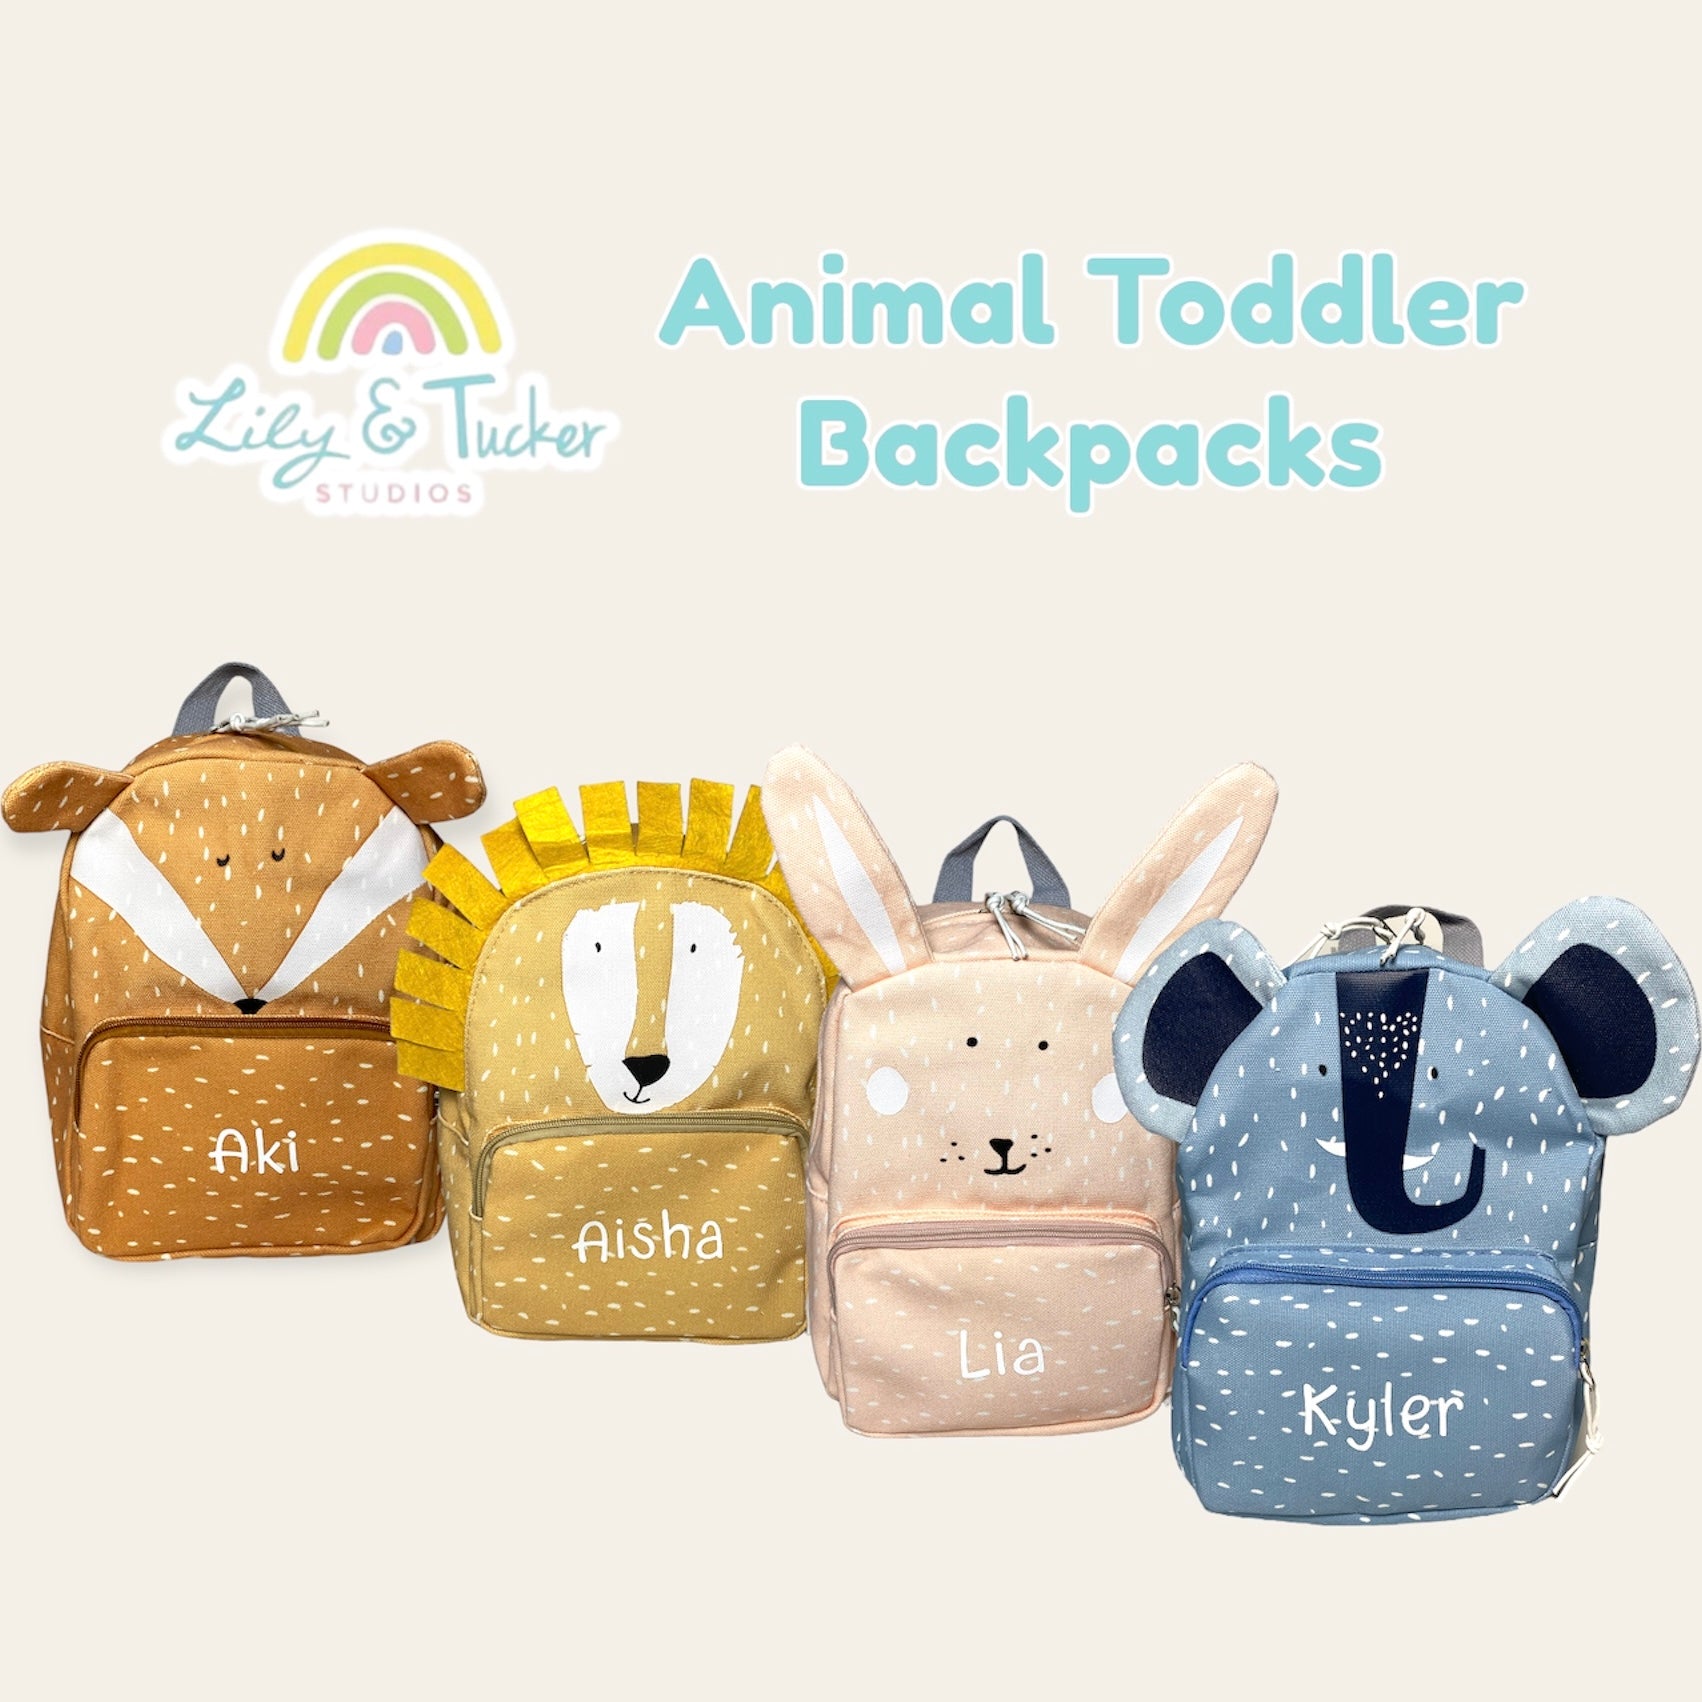 Animal Toddler Backpacks